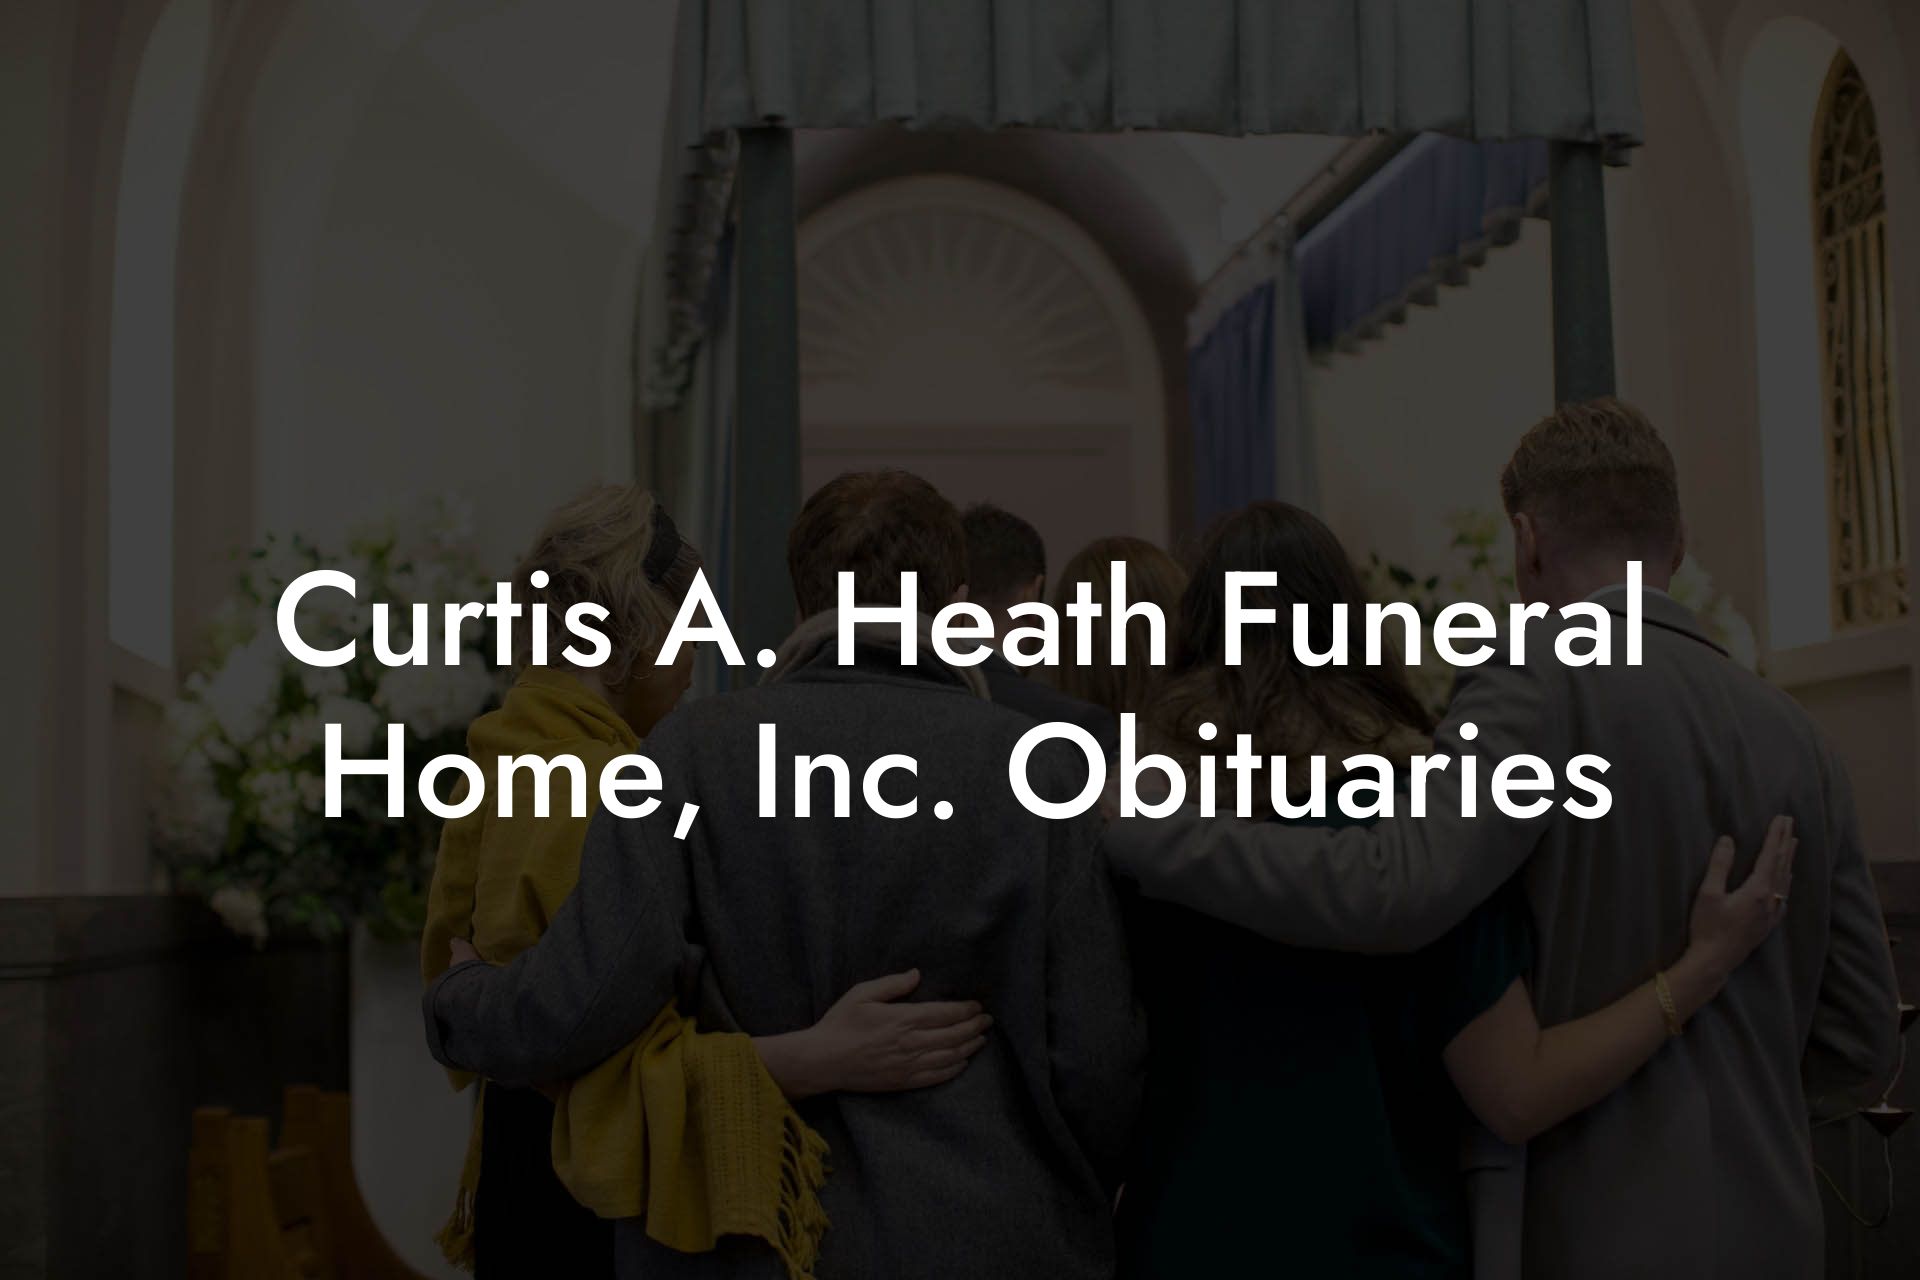 Curtis A. Heath Funeral Home, Inc. Obituaries